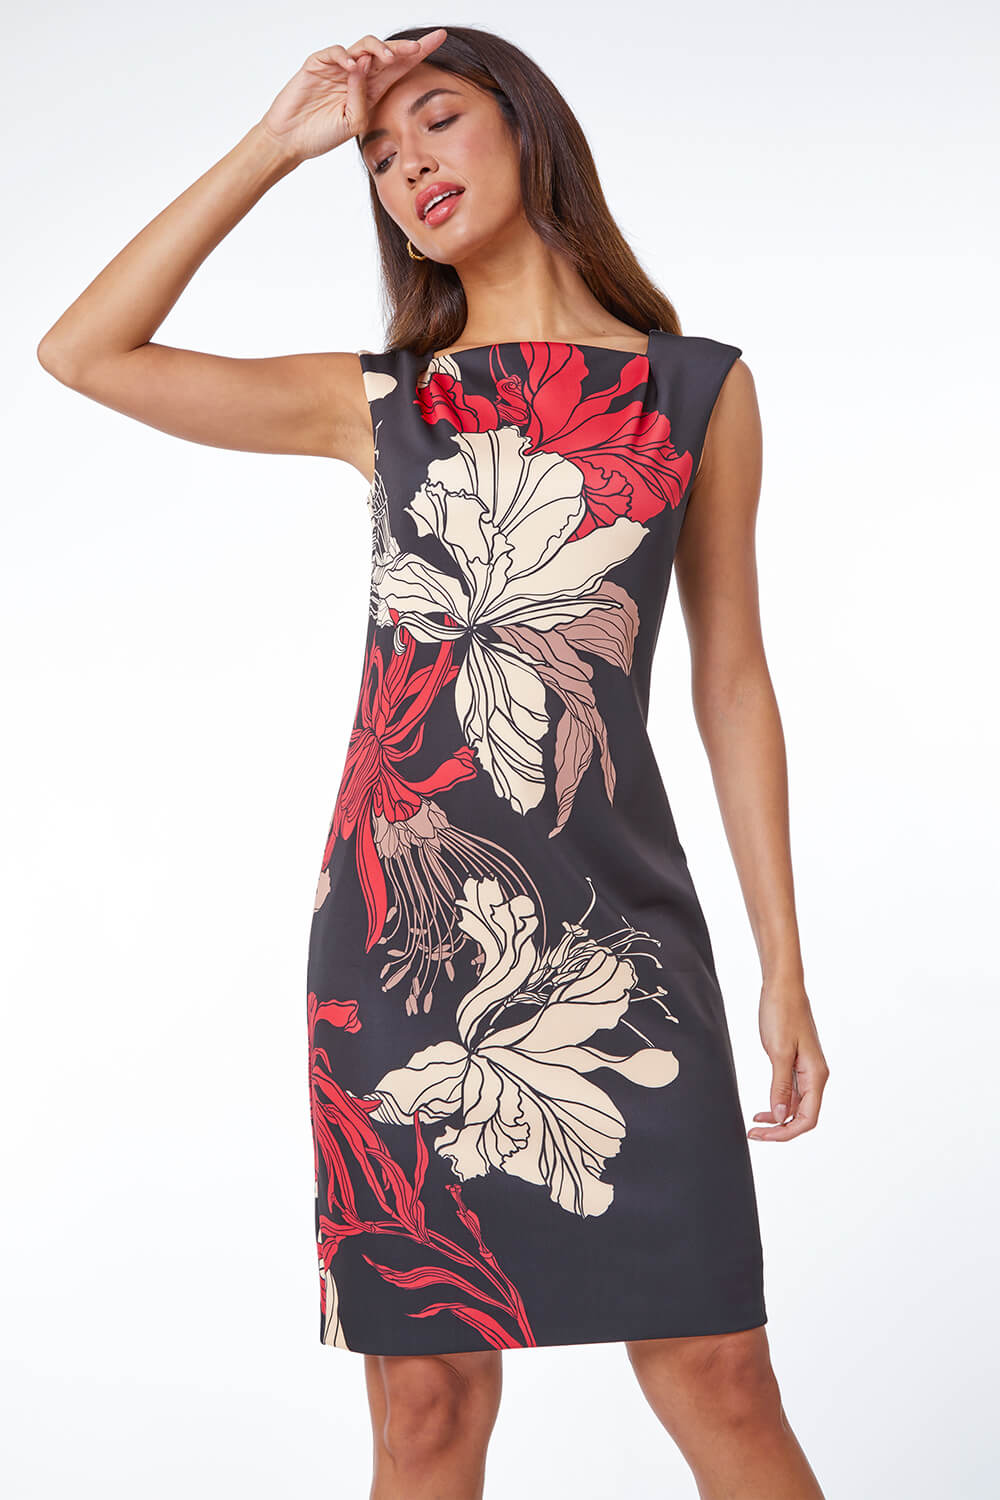 Floral Premium Stretch Dress 